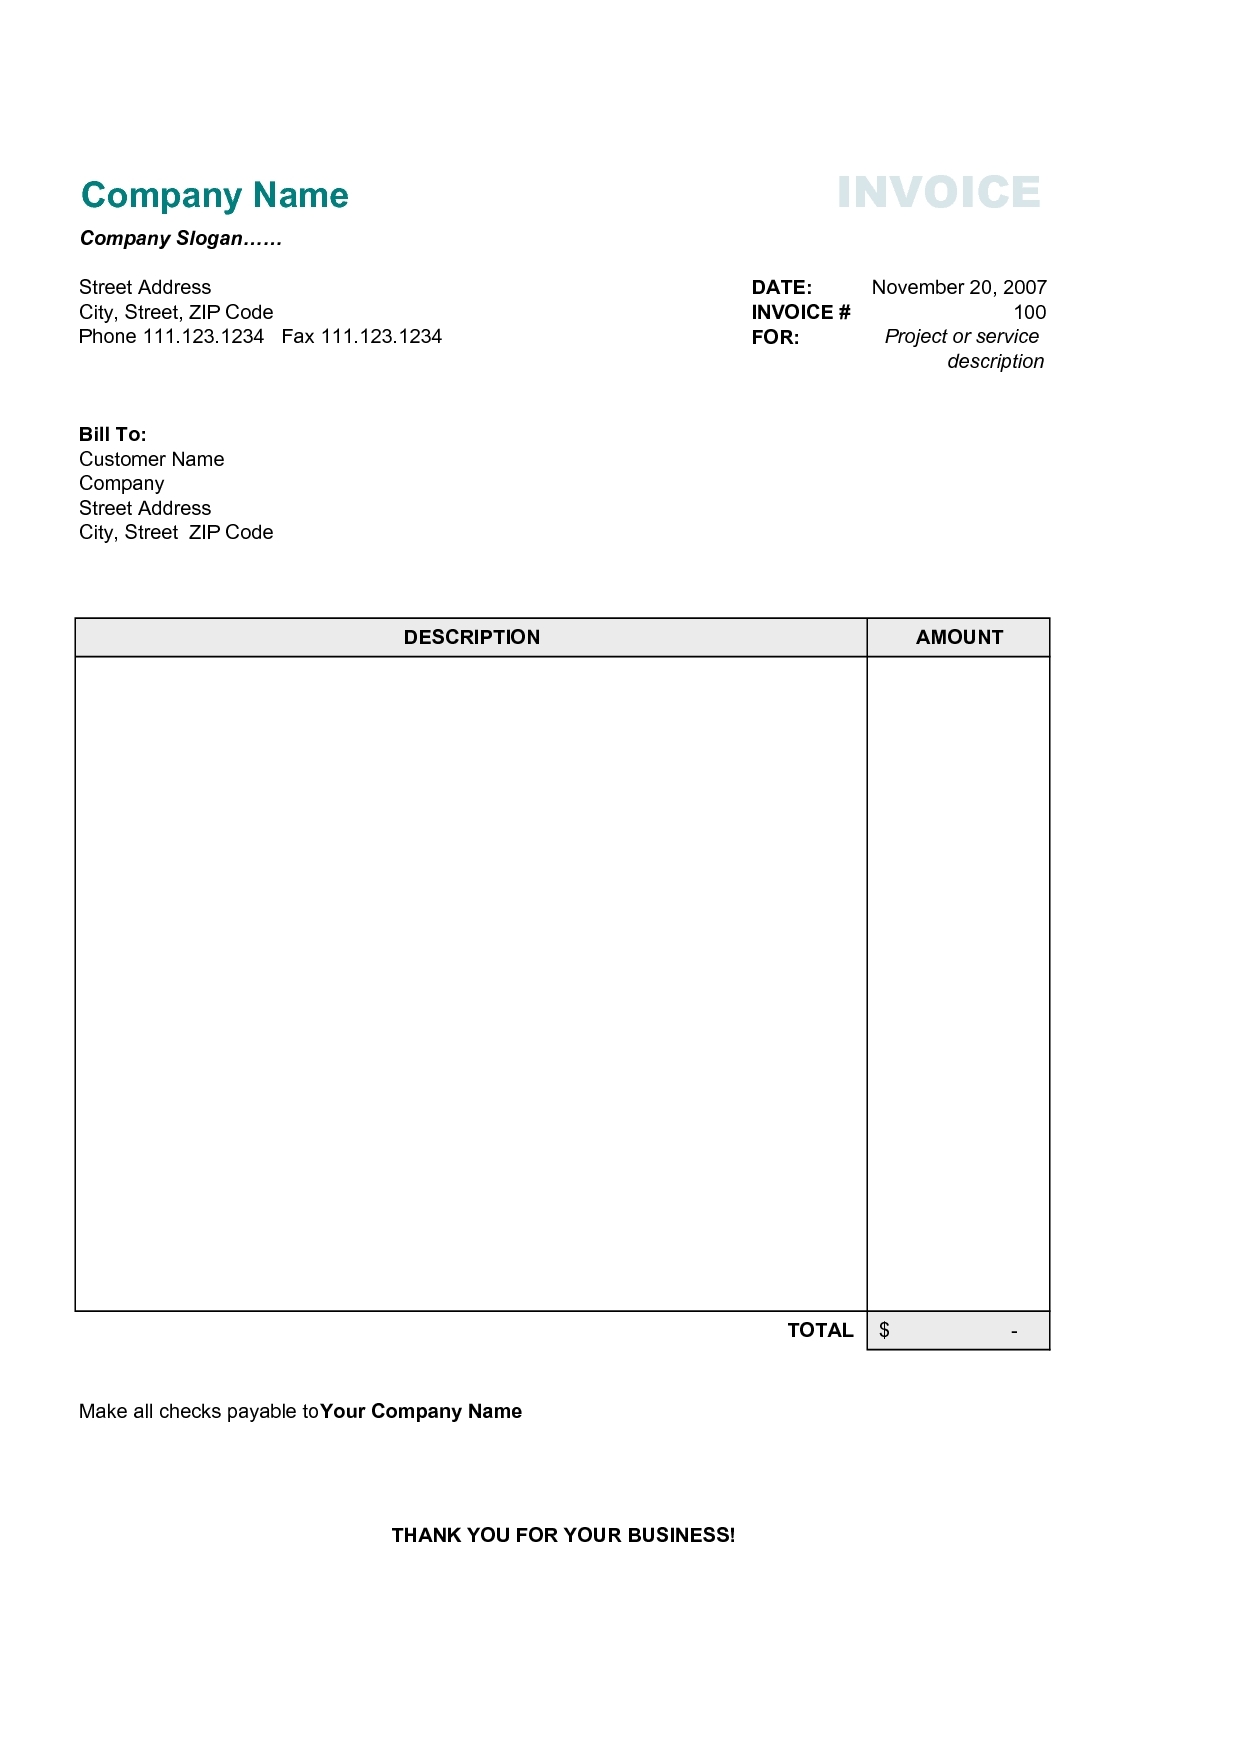 Blank Invoice Pdf. 15 New Invoice Templates | Printable Paper 